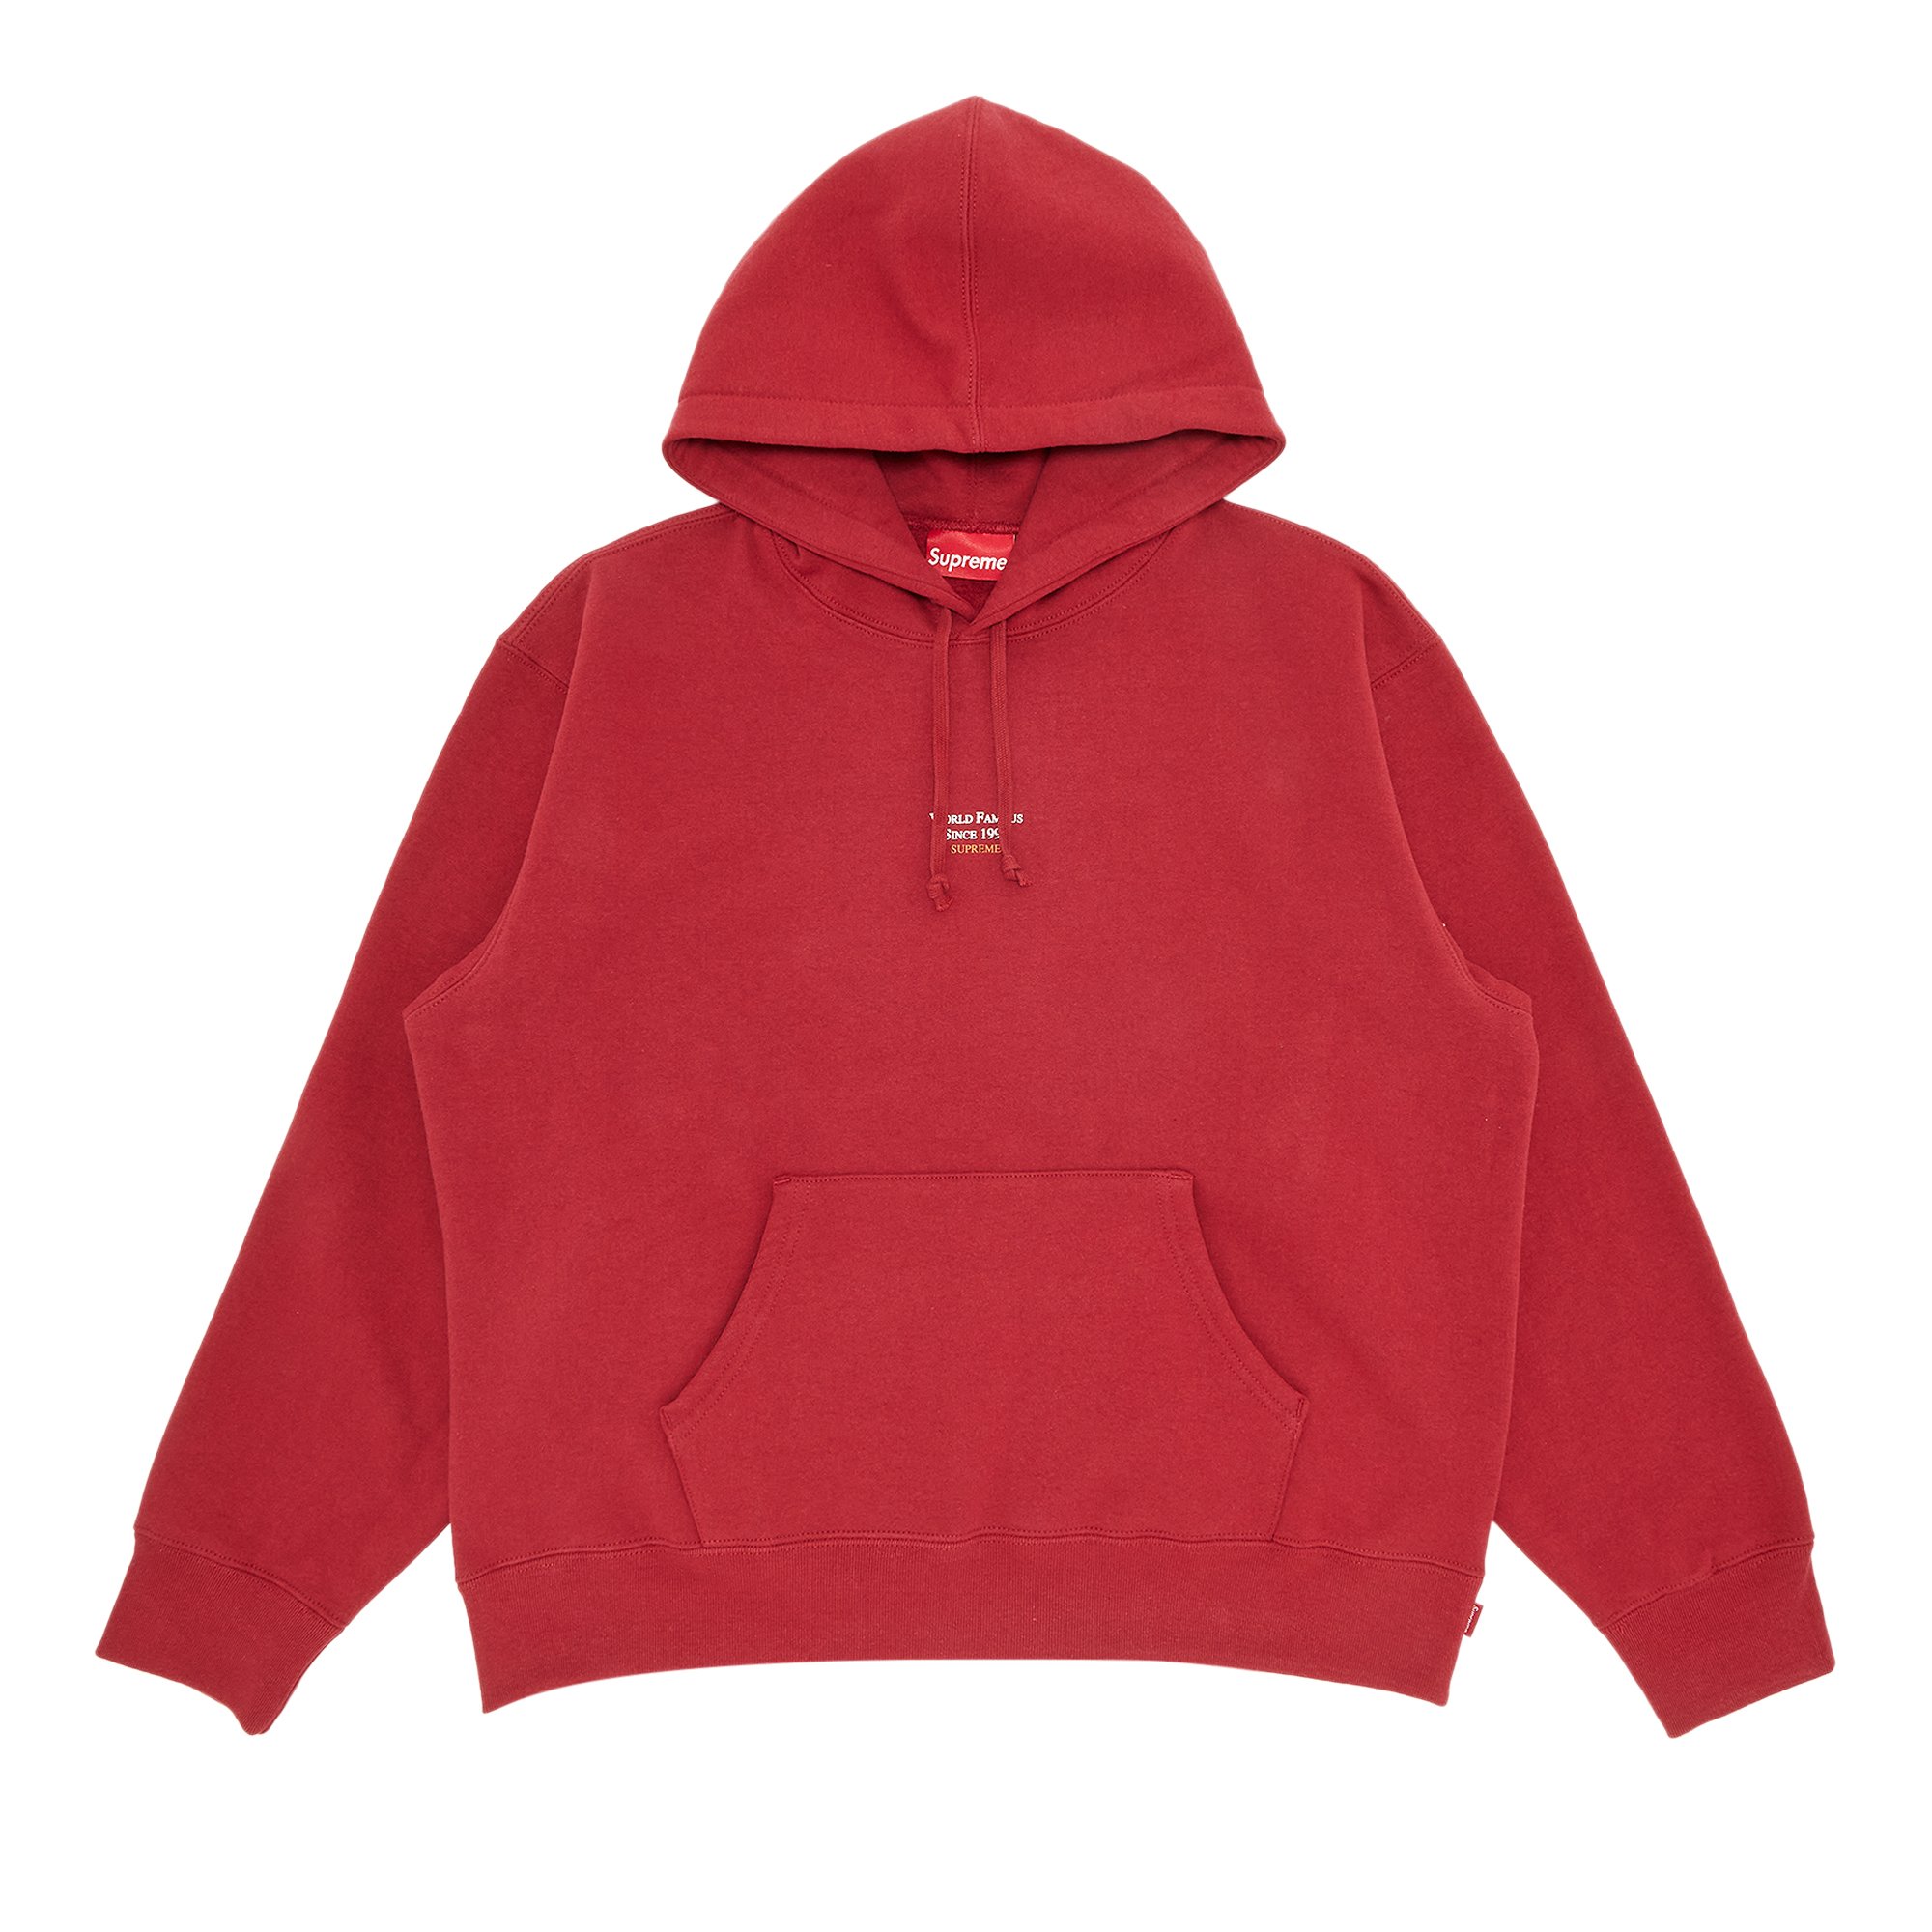 Buy Supreme World Famous Micro Hooded Sweatshirt 'Dark Red